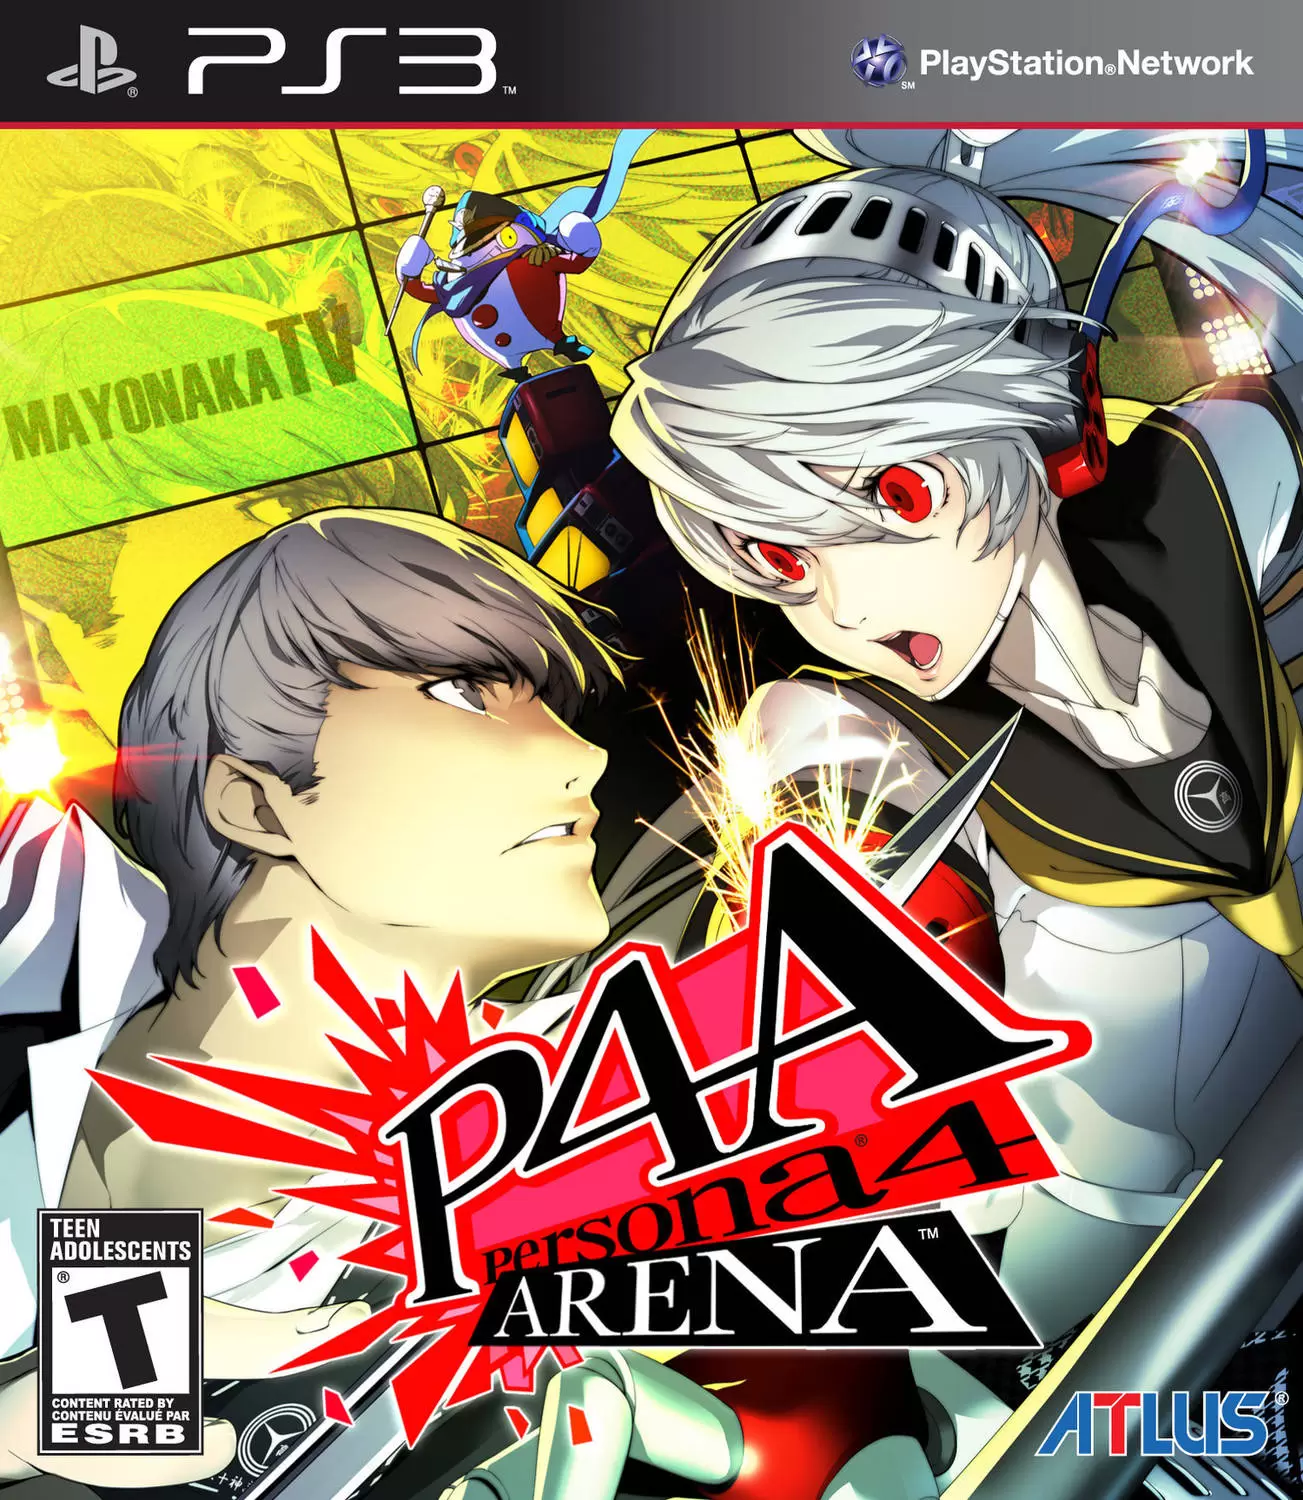 PS3 Games - Persona 4 Arena